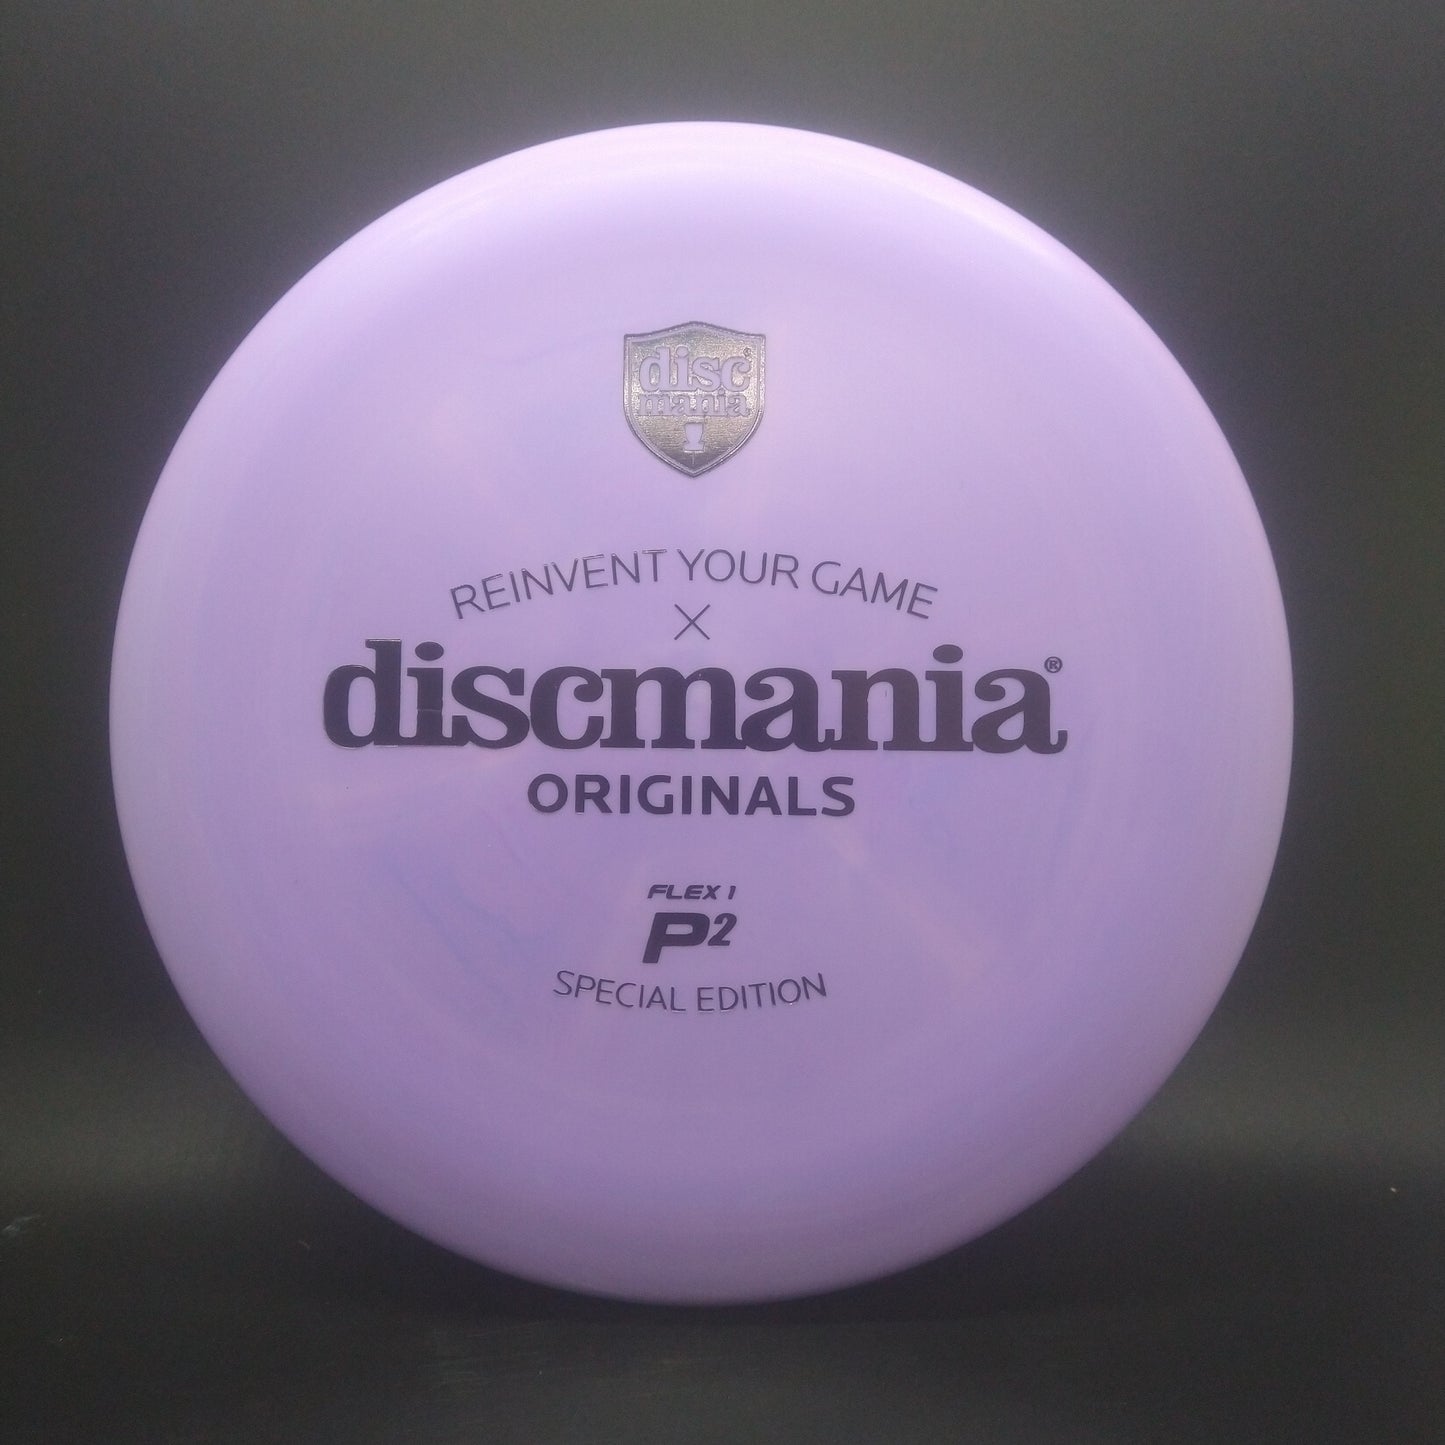 Disc Mania Flex 1 P2 Purple 176g